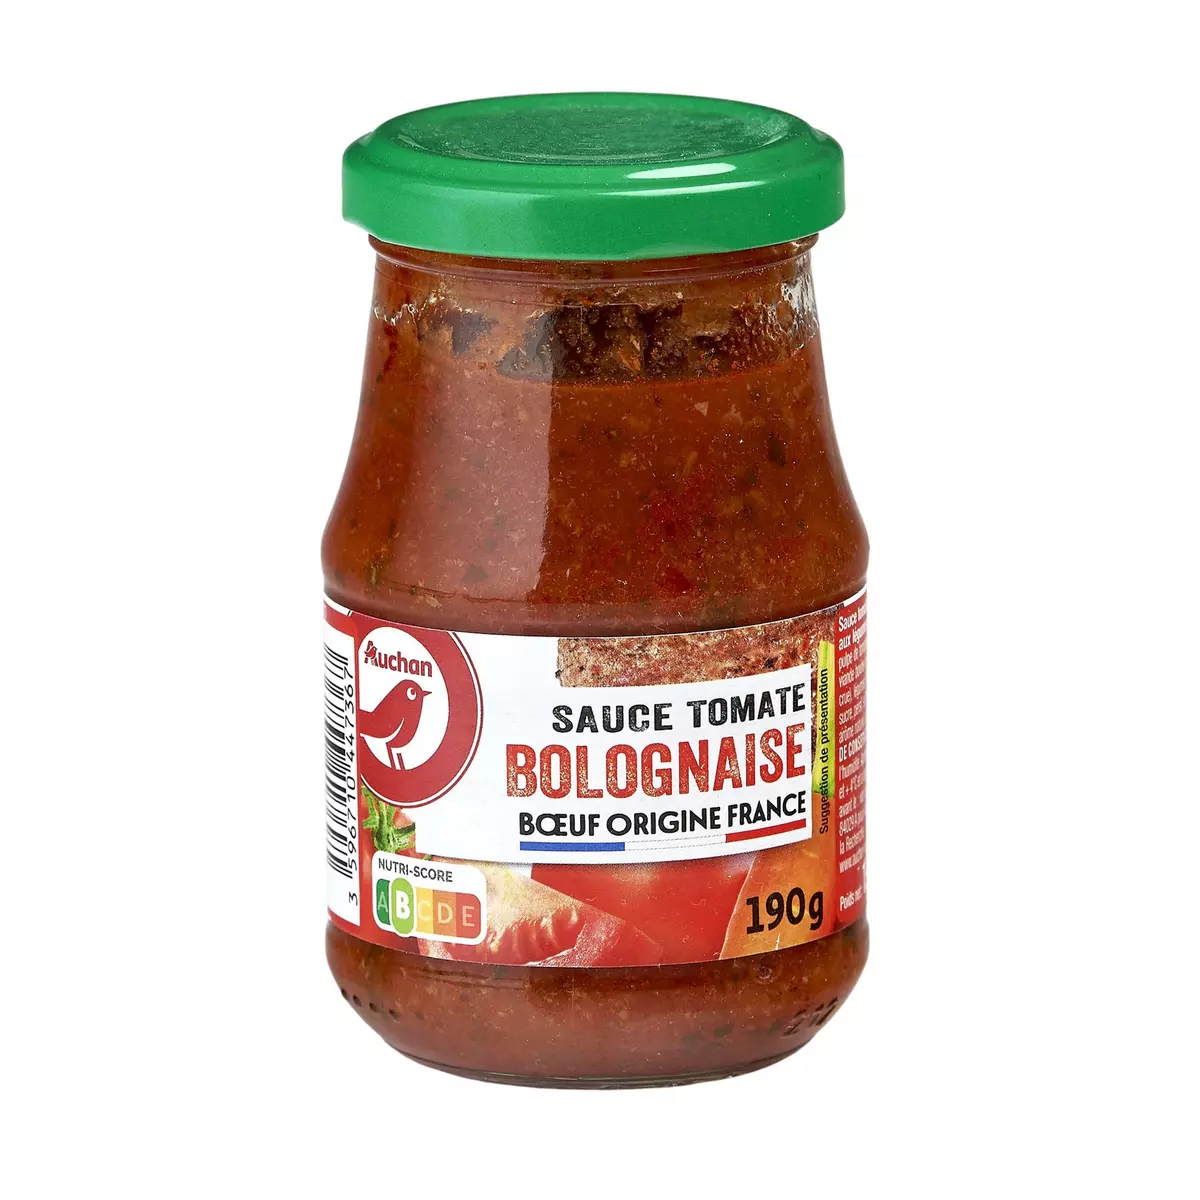 AUCHAN Sauce bolognaise origine France en bocal 190g